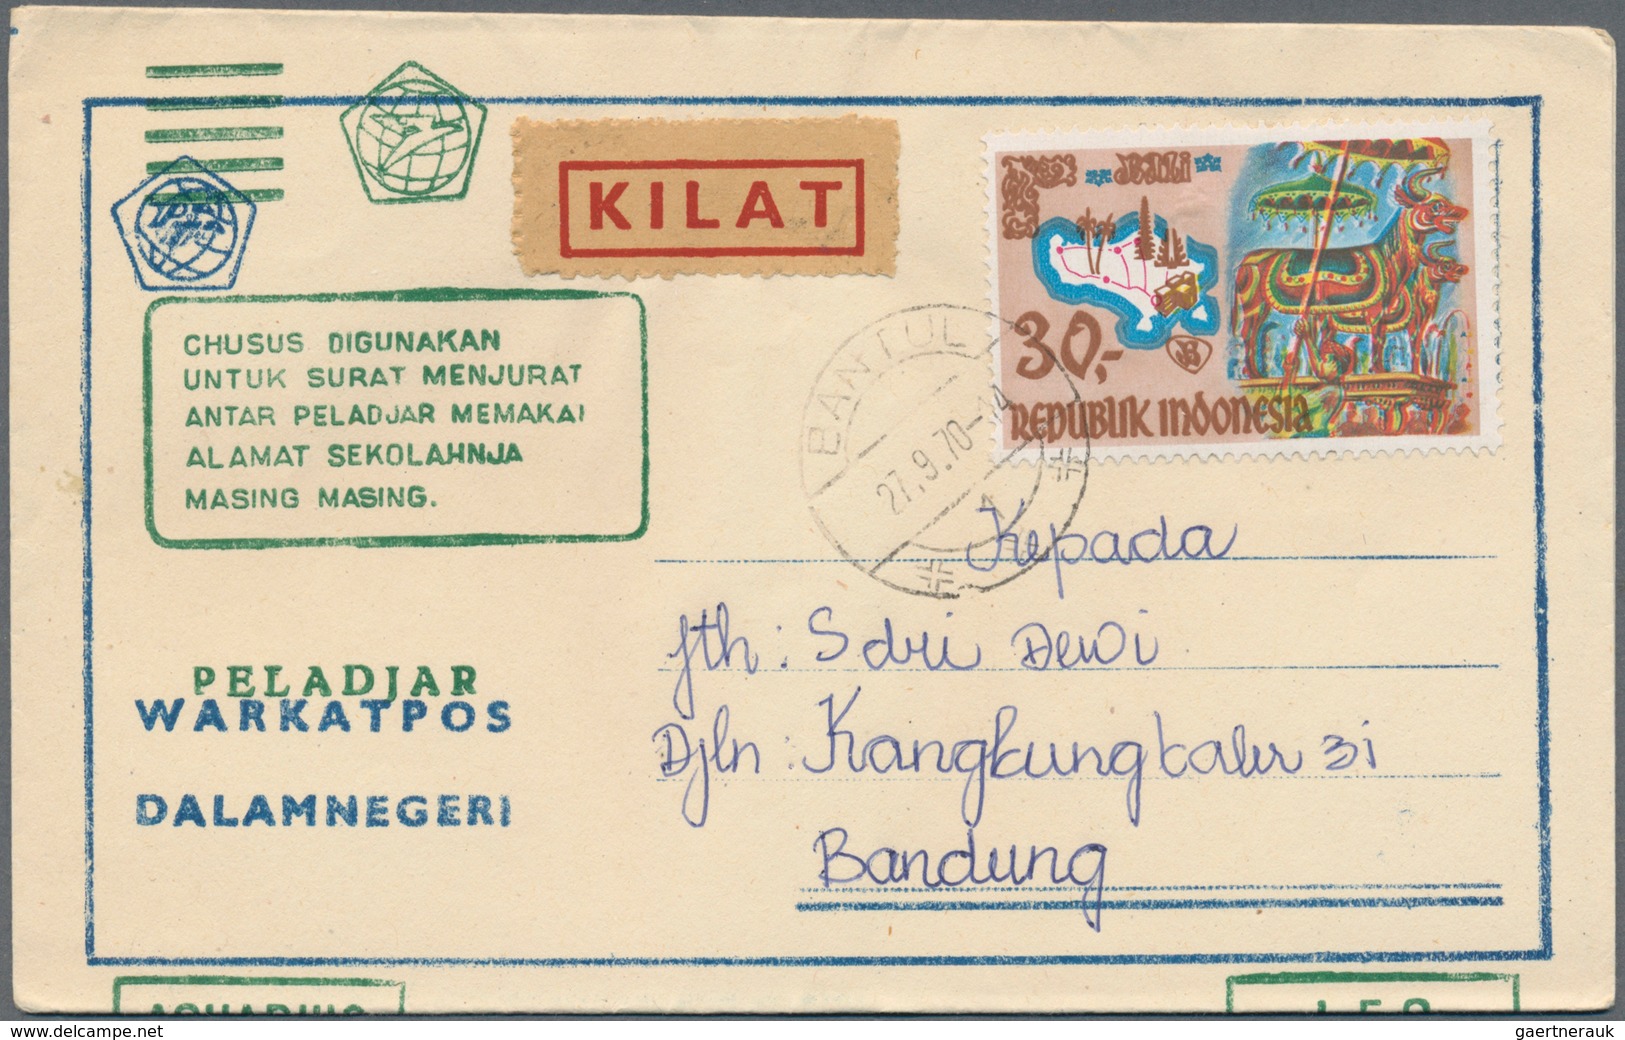 22784 Indonesien: 1950/76, military / UN peacekeeping / govt. service special envelopes collection: Milita